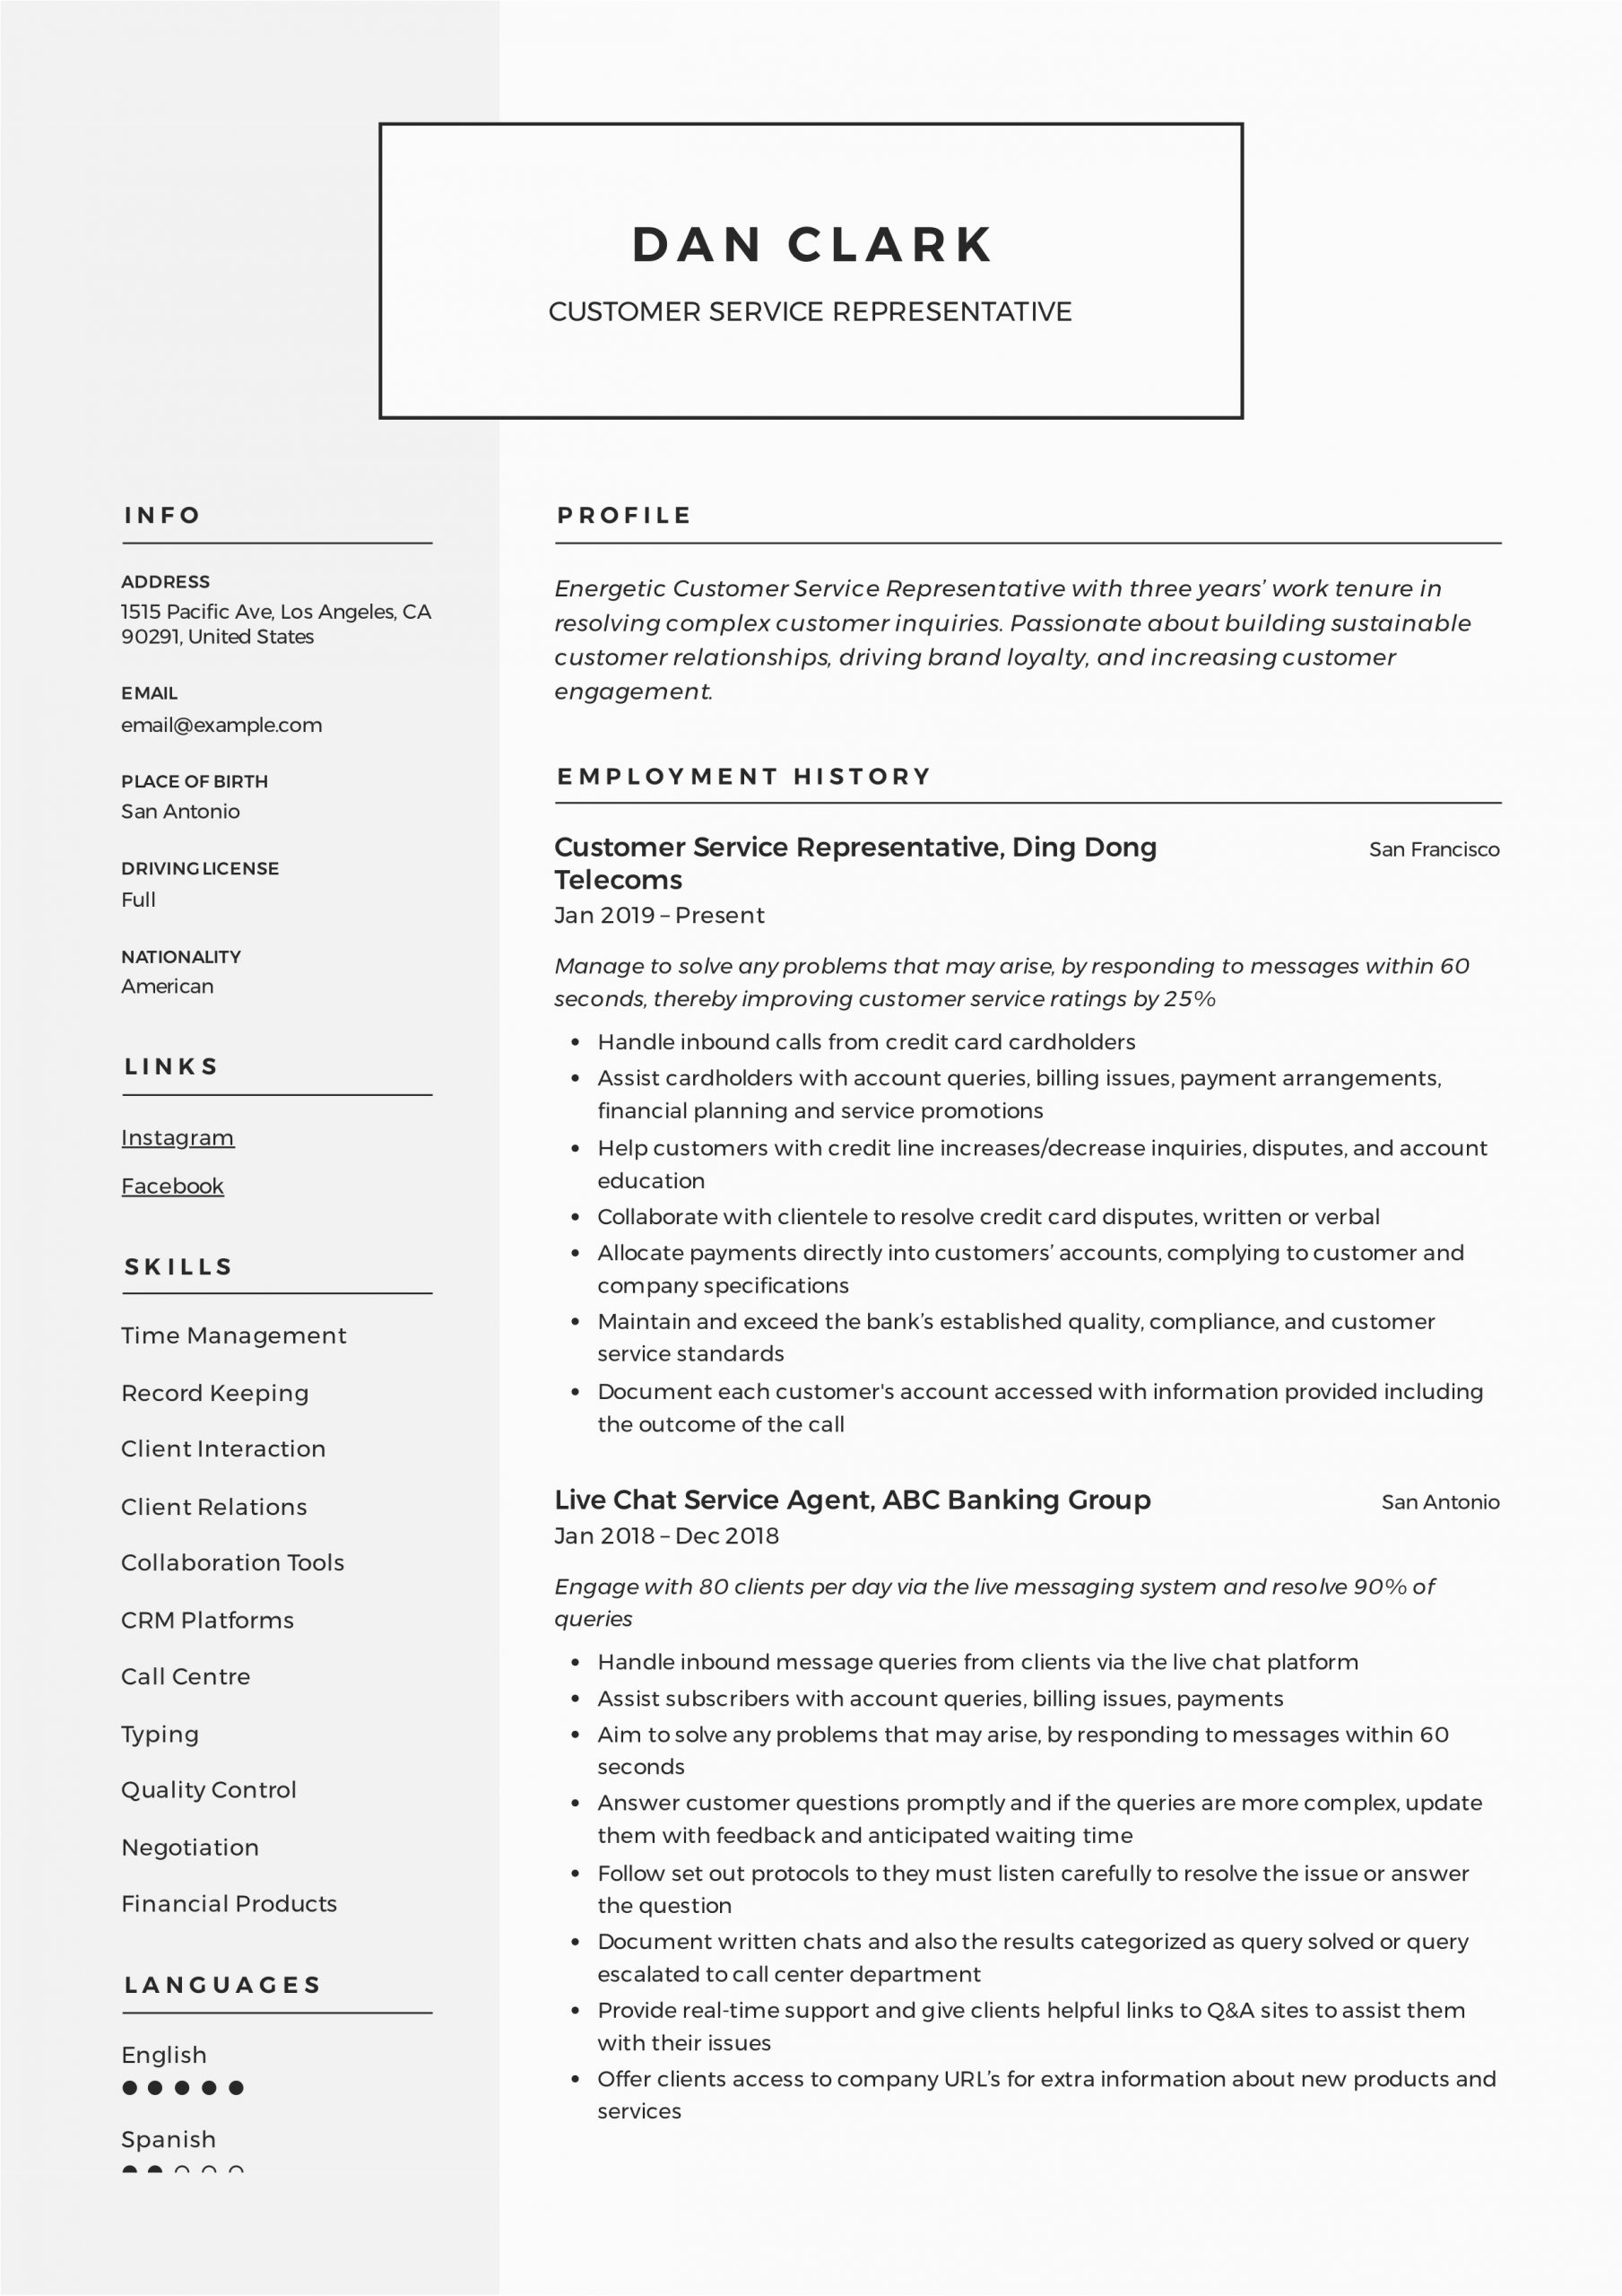 Customer Service Representative Job Description Resume Sample How to Customer Service Representative Resume & 12 Pdf